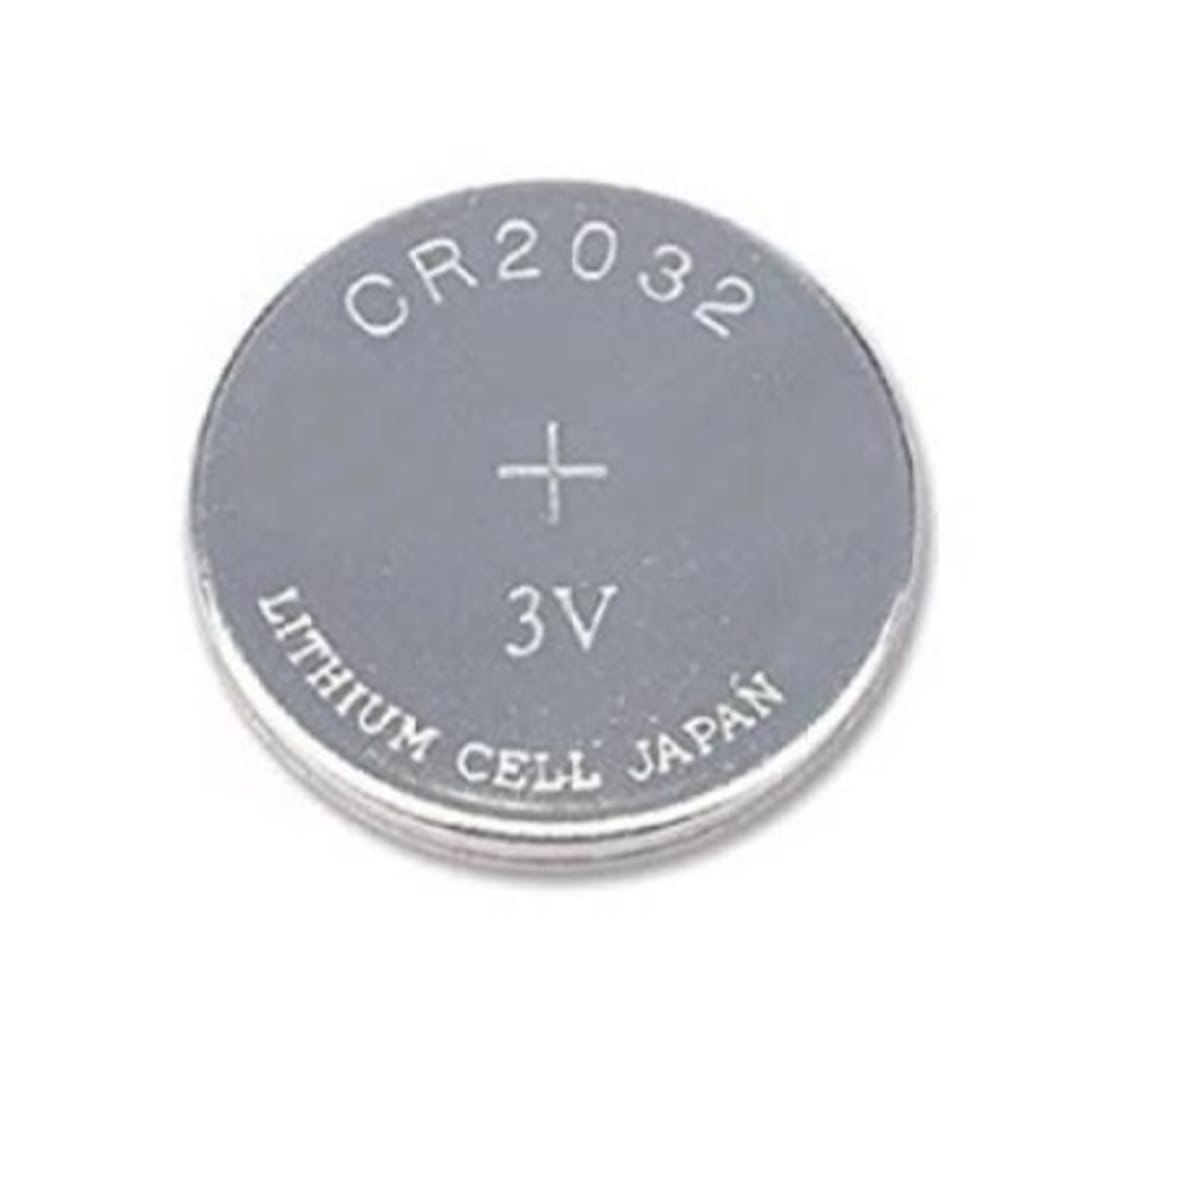 Pile Lithium Battery Maxell CR2032 3v CEMOS for calculator